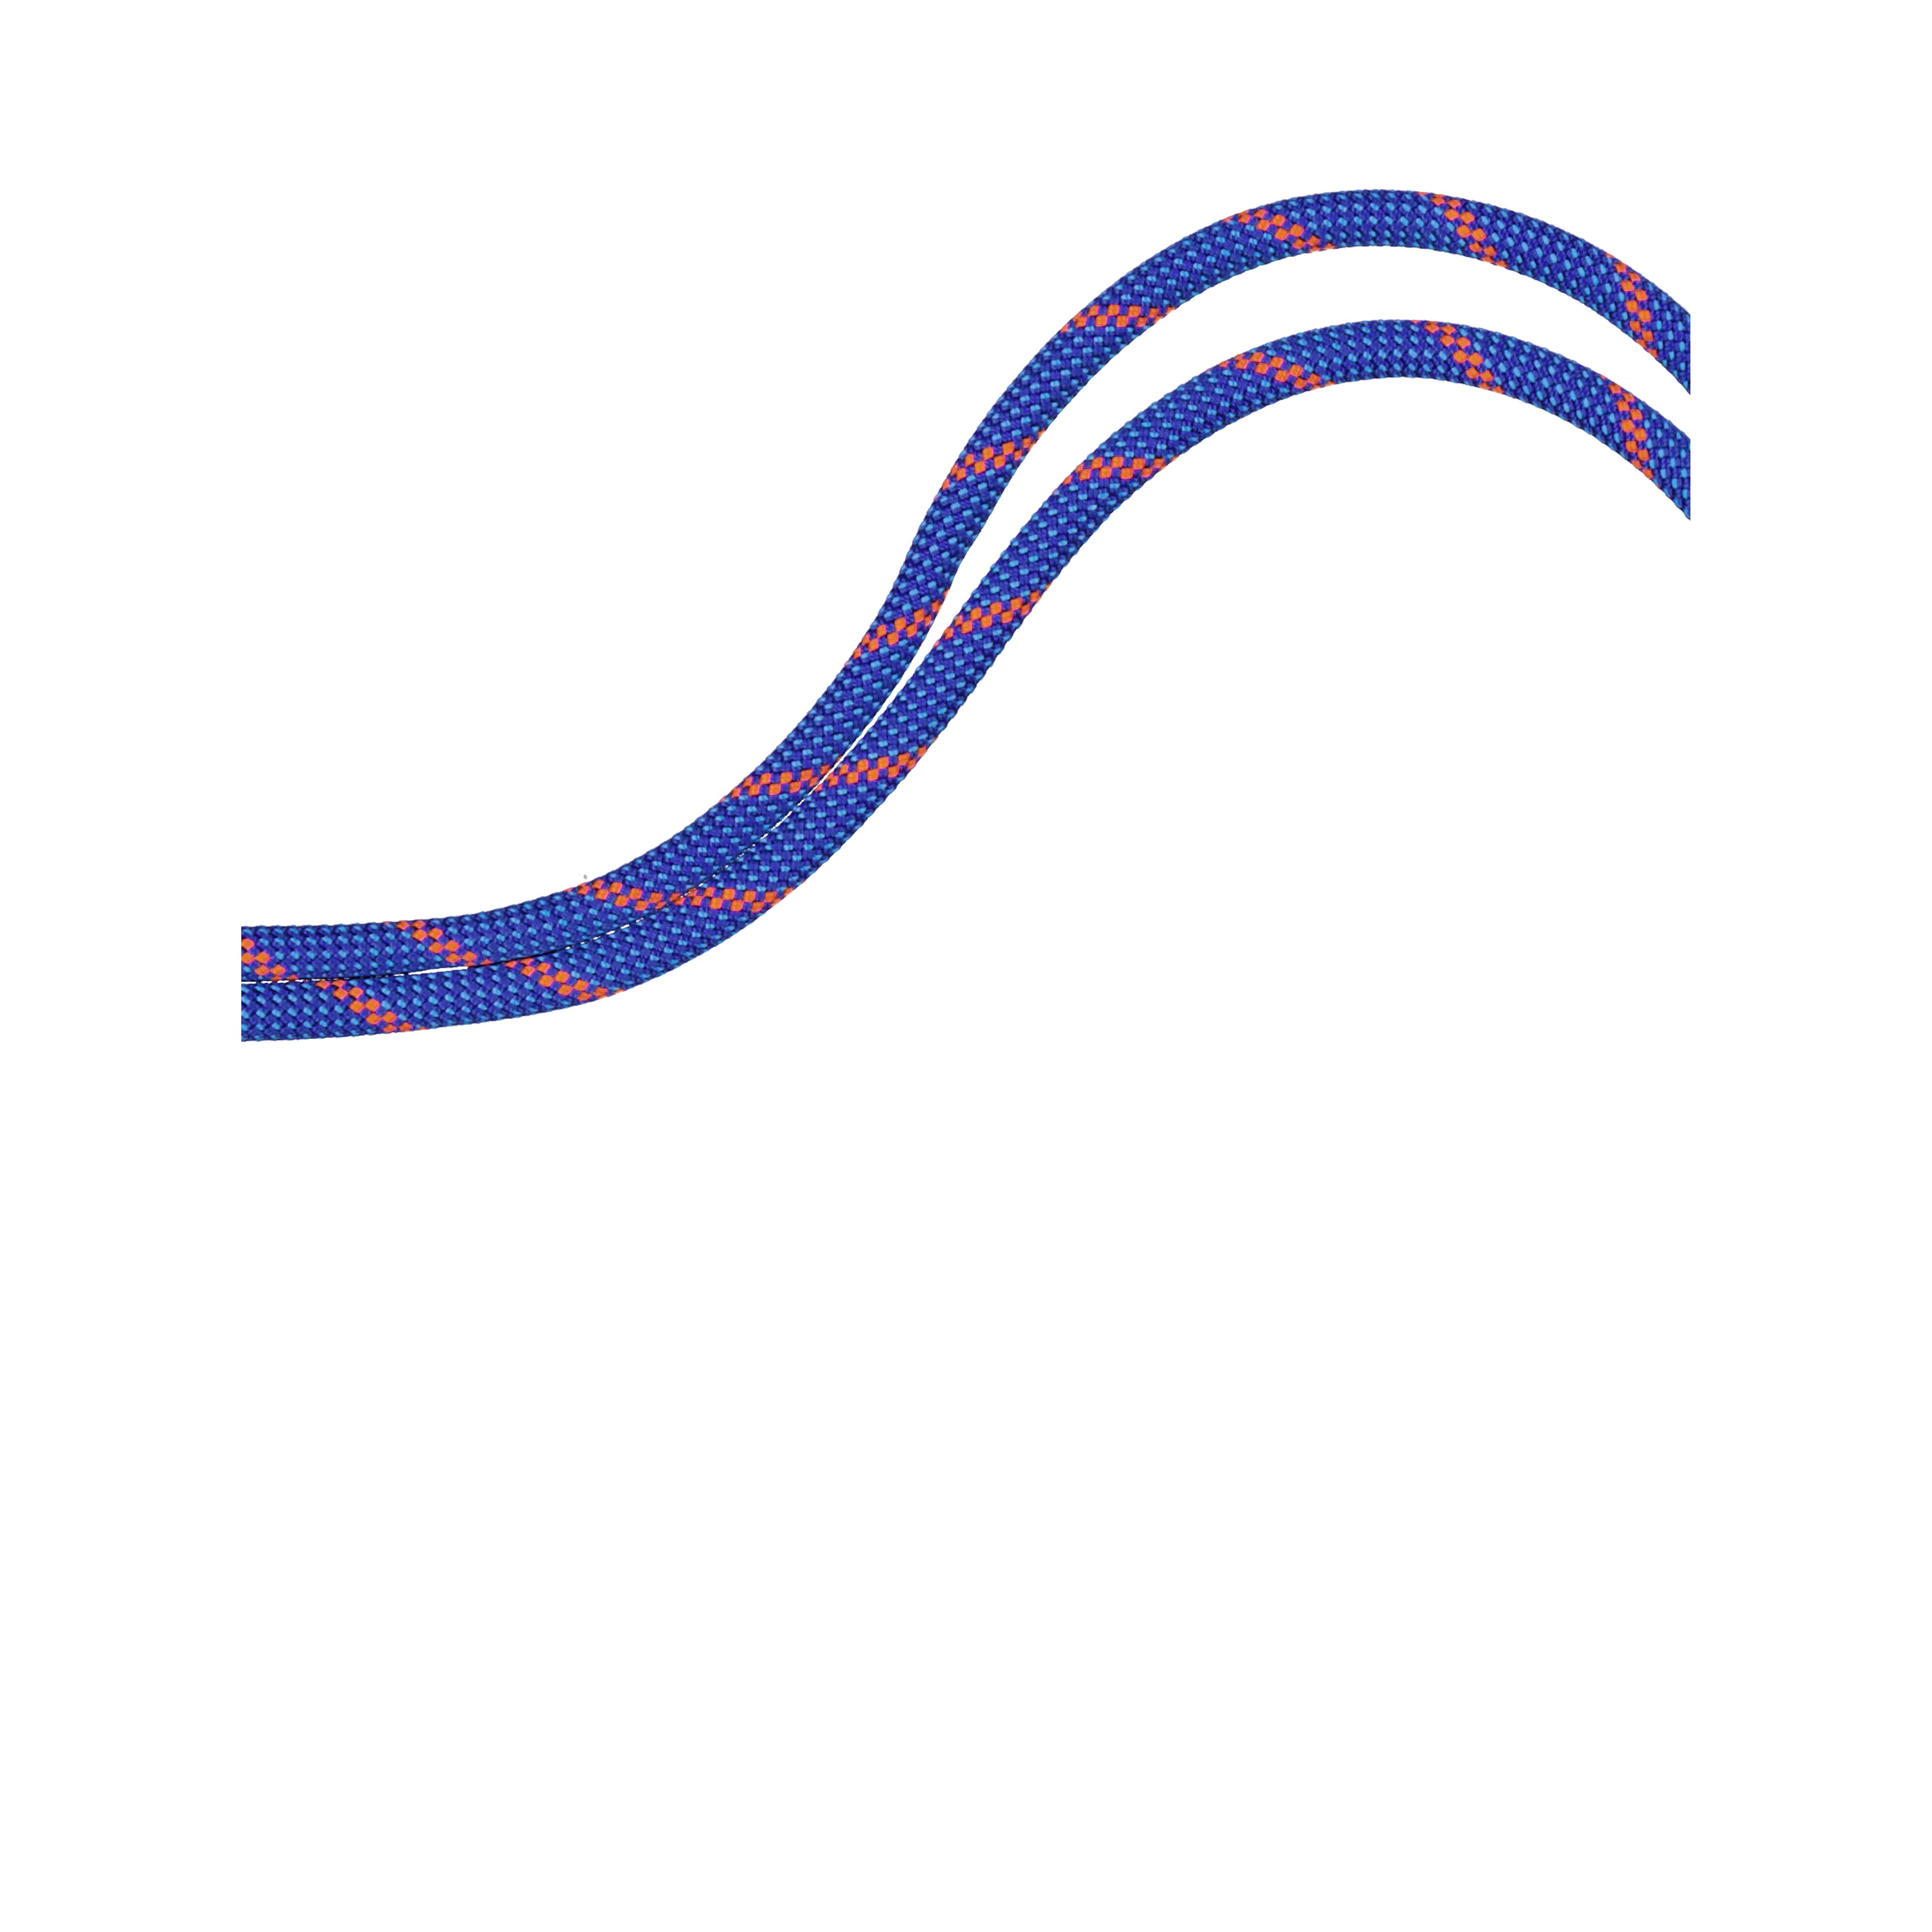 7.5 Alpine Sender Dry Rope product image